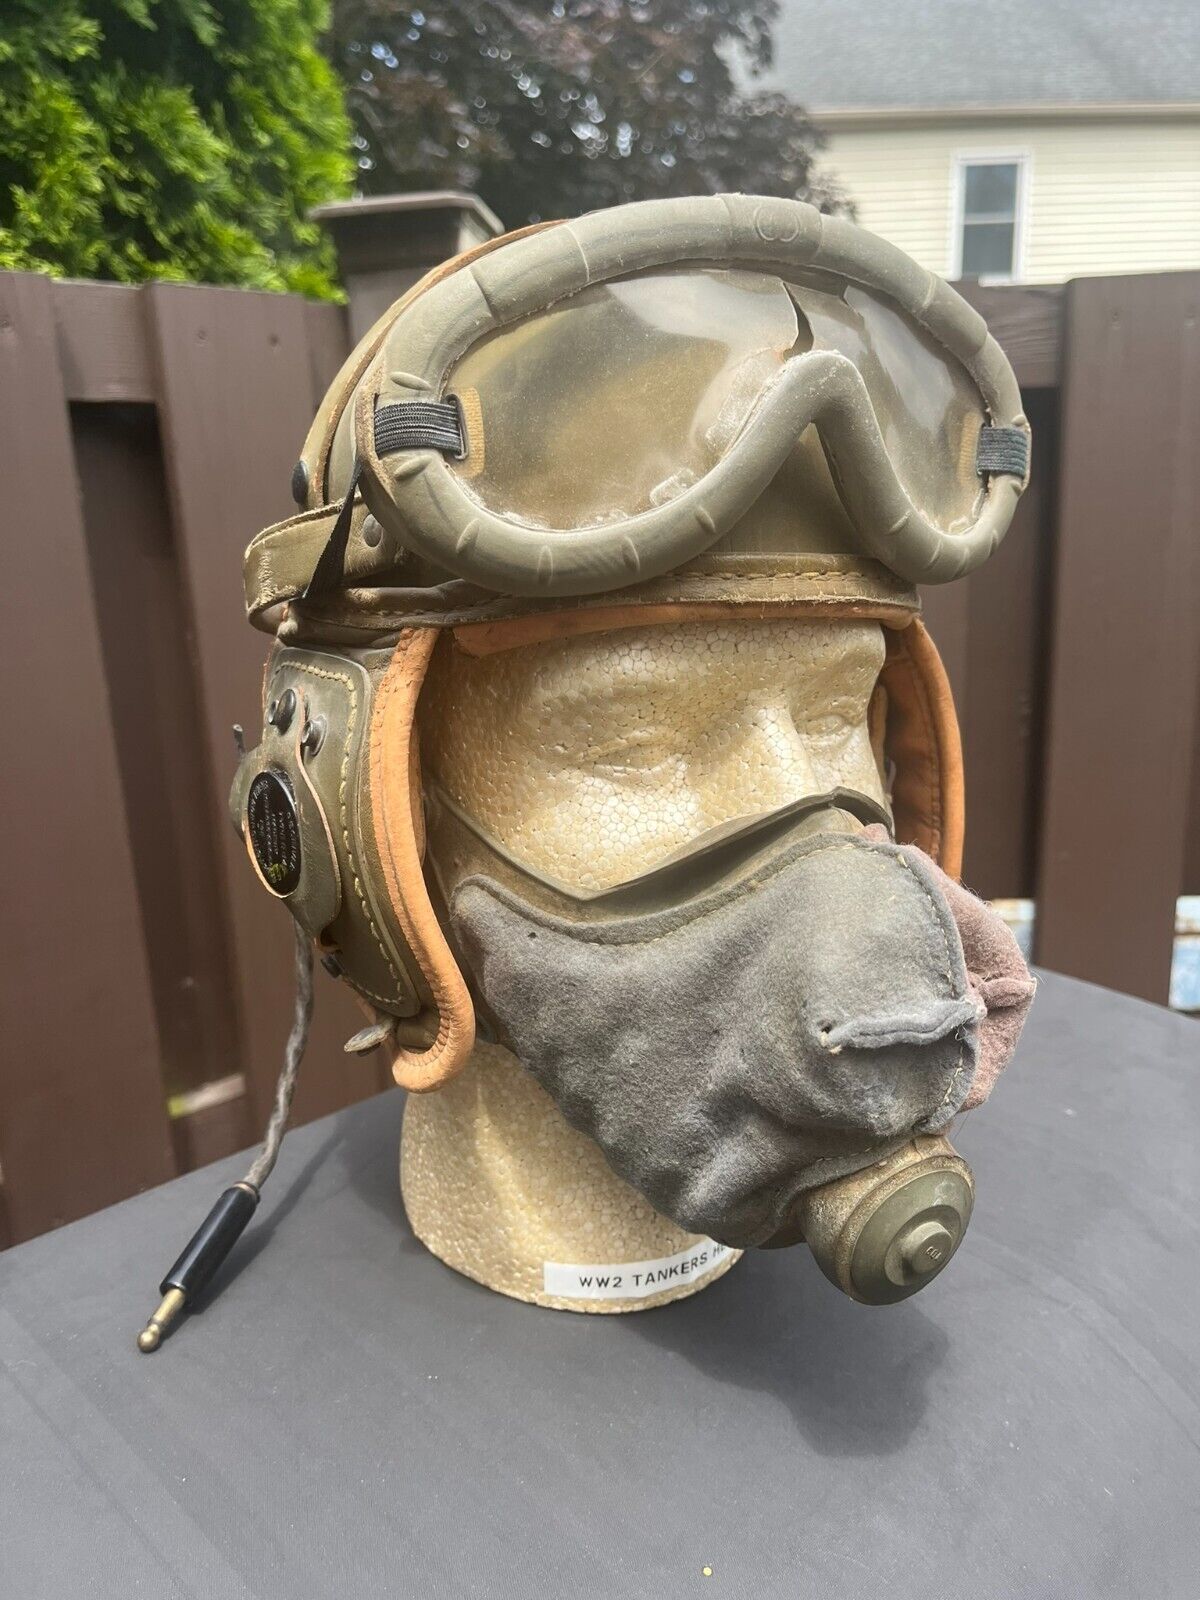 WW2 M1938 Tanker Helmet, Goggles, Dust mask, R-14 ear receivers and display head